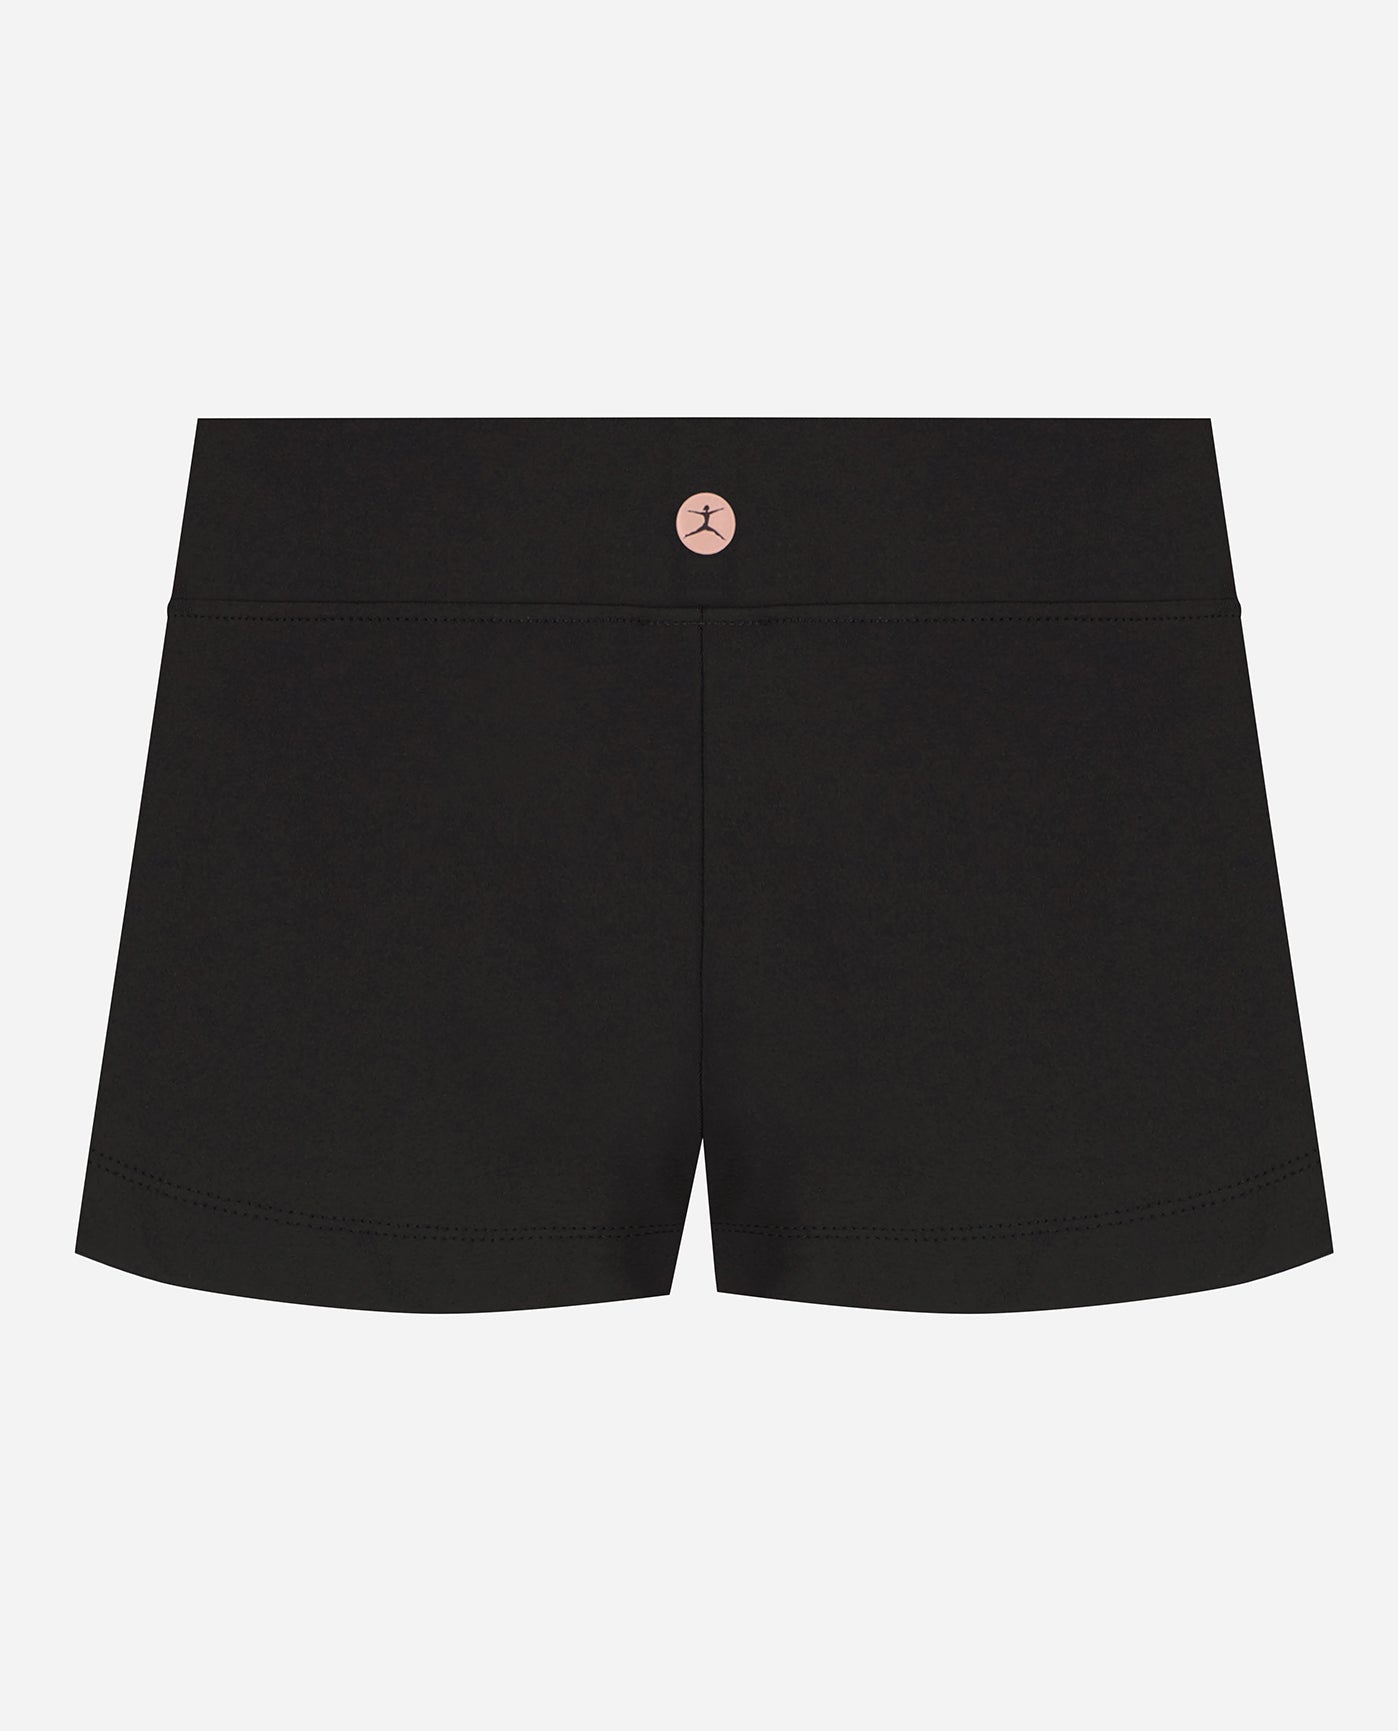 Danskin Now Color Block Solid Black Athletic Shorts Size X-Large